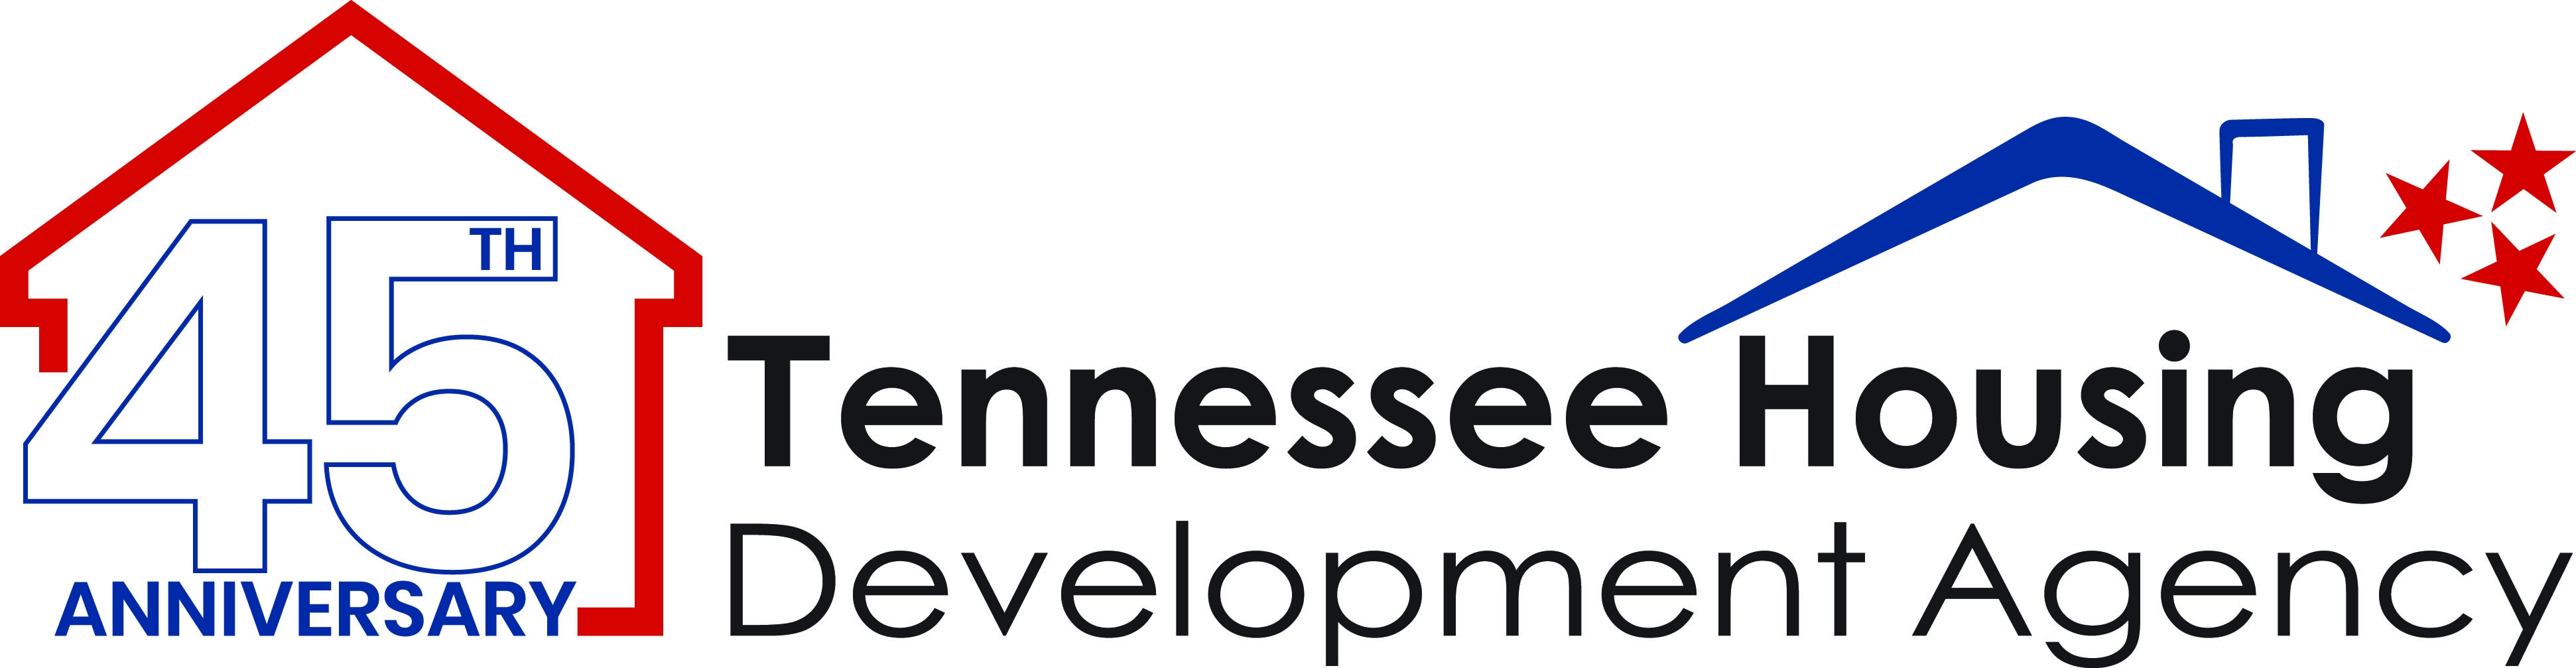 Tennessee Housing Development Agency THDA Celebrates its 45th Anniversary